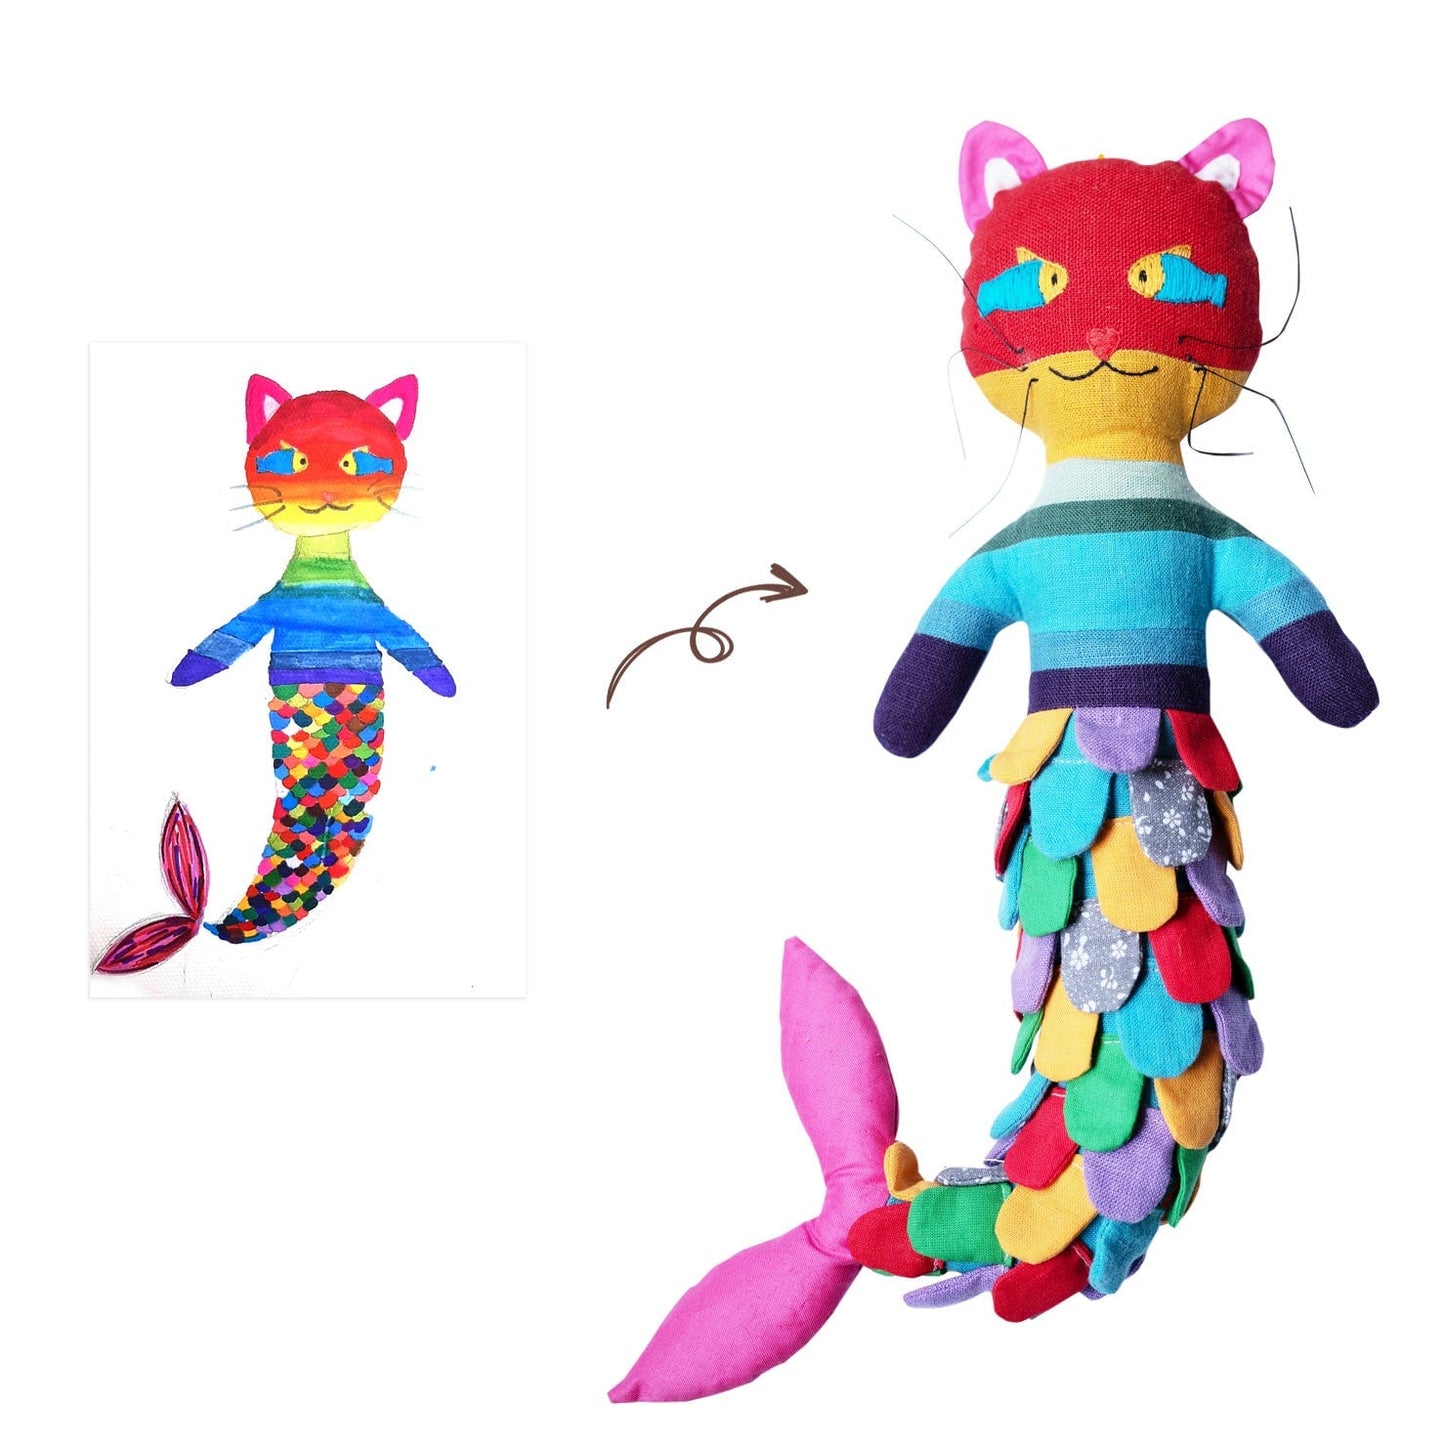 Custom Stuffed Animal - Custom Plush Toy from Drawing